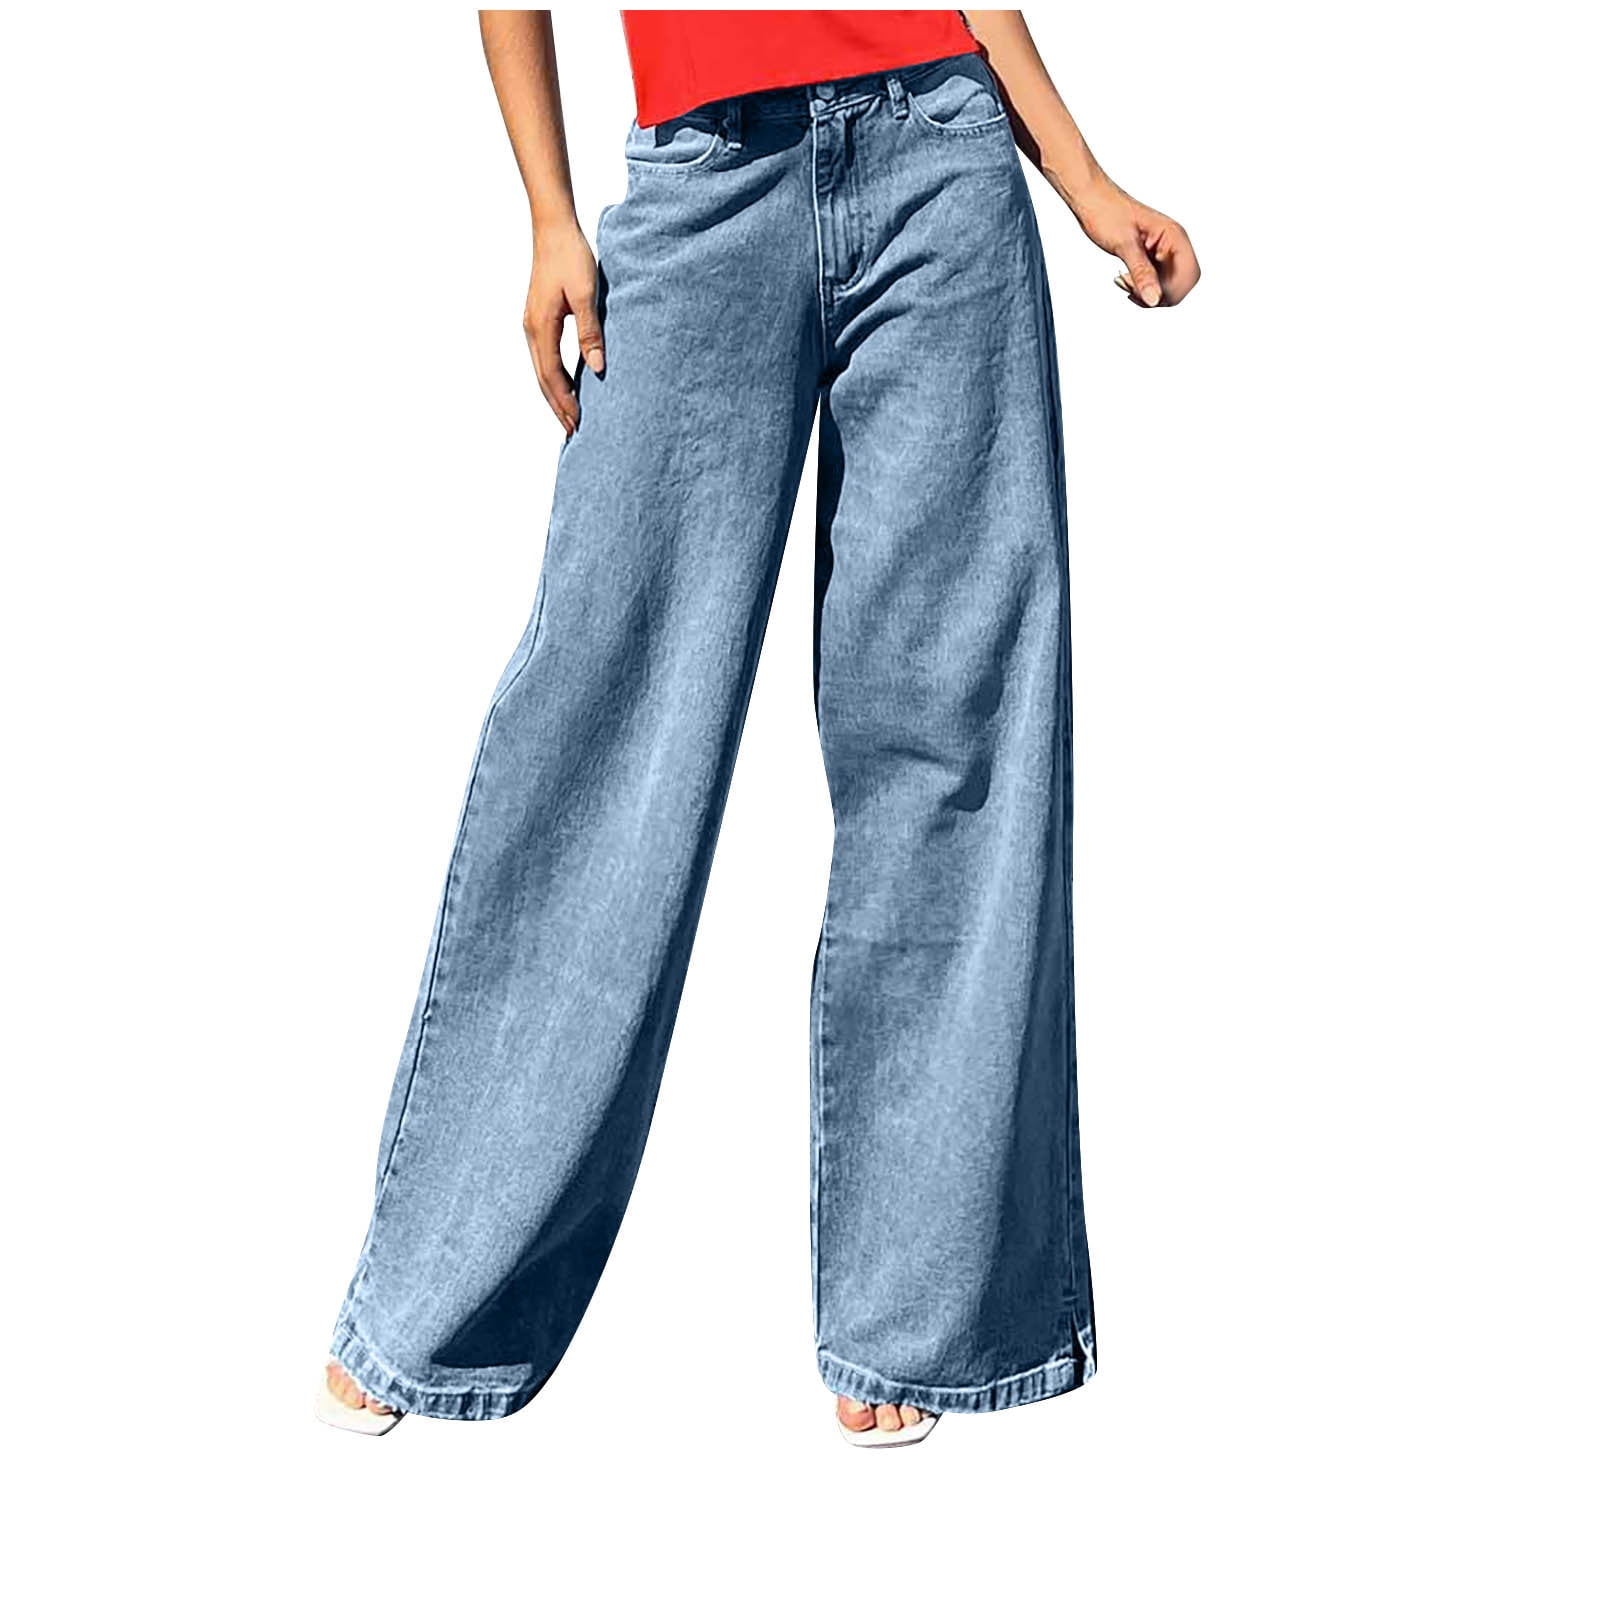 Girl Elastic Waist Loose Fit Jeans Denim Pants Wide Leg Long Casual Trousers